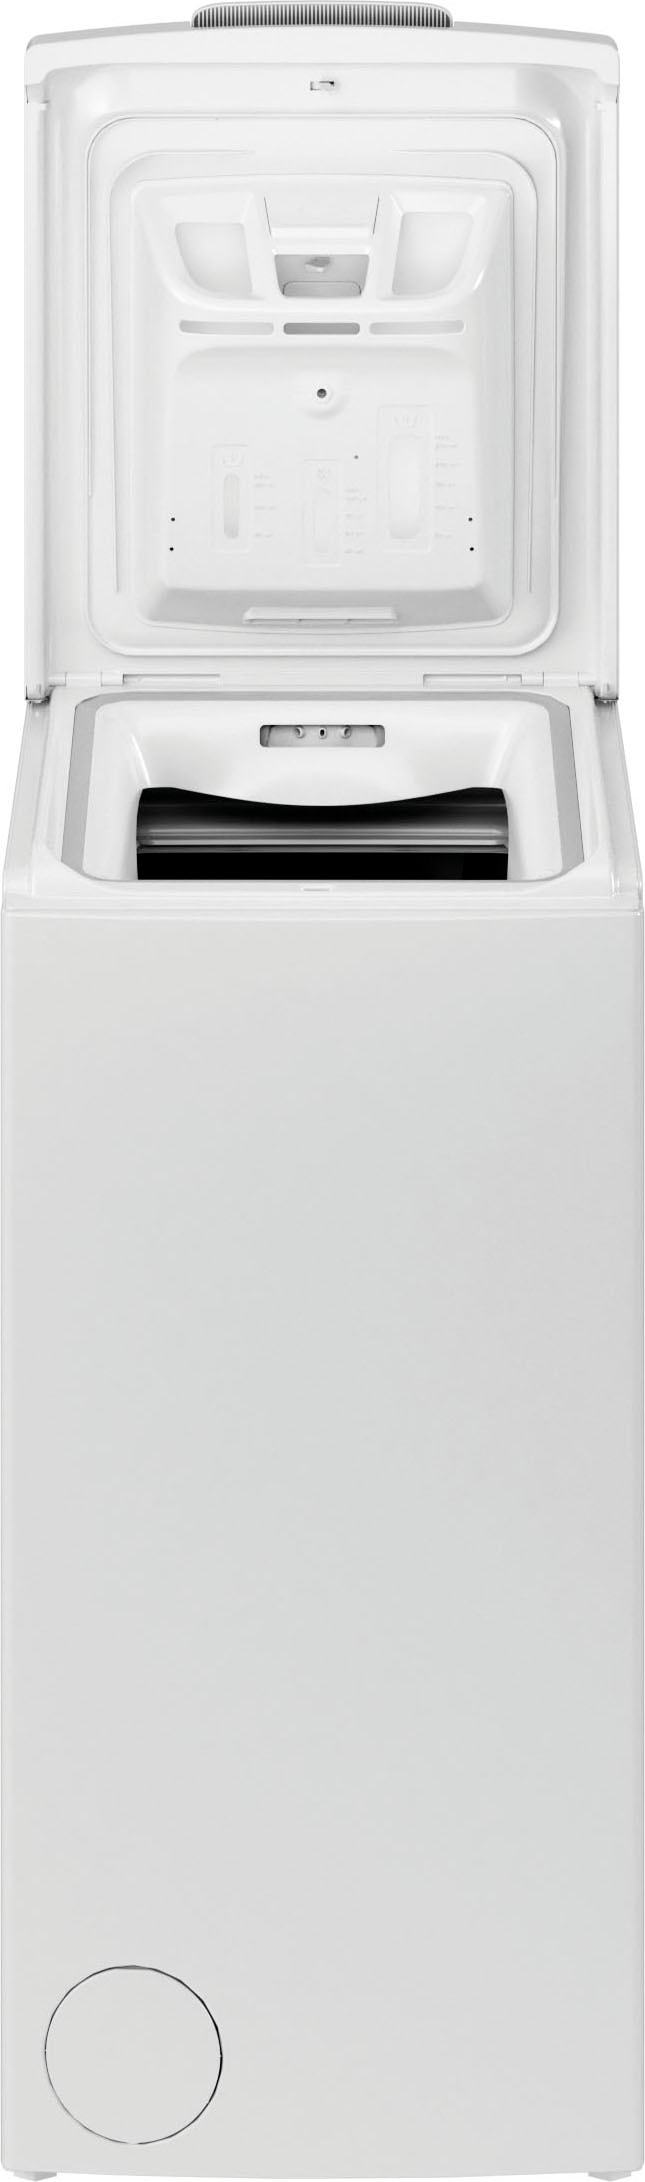 Privileg Waschmaschine Toplader »PWT B623S«, PWT B623S, 6 kg, 1200 U/min